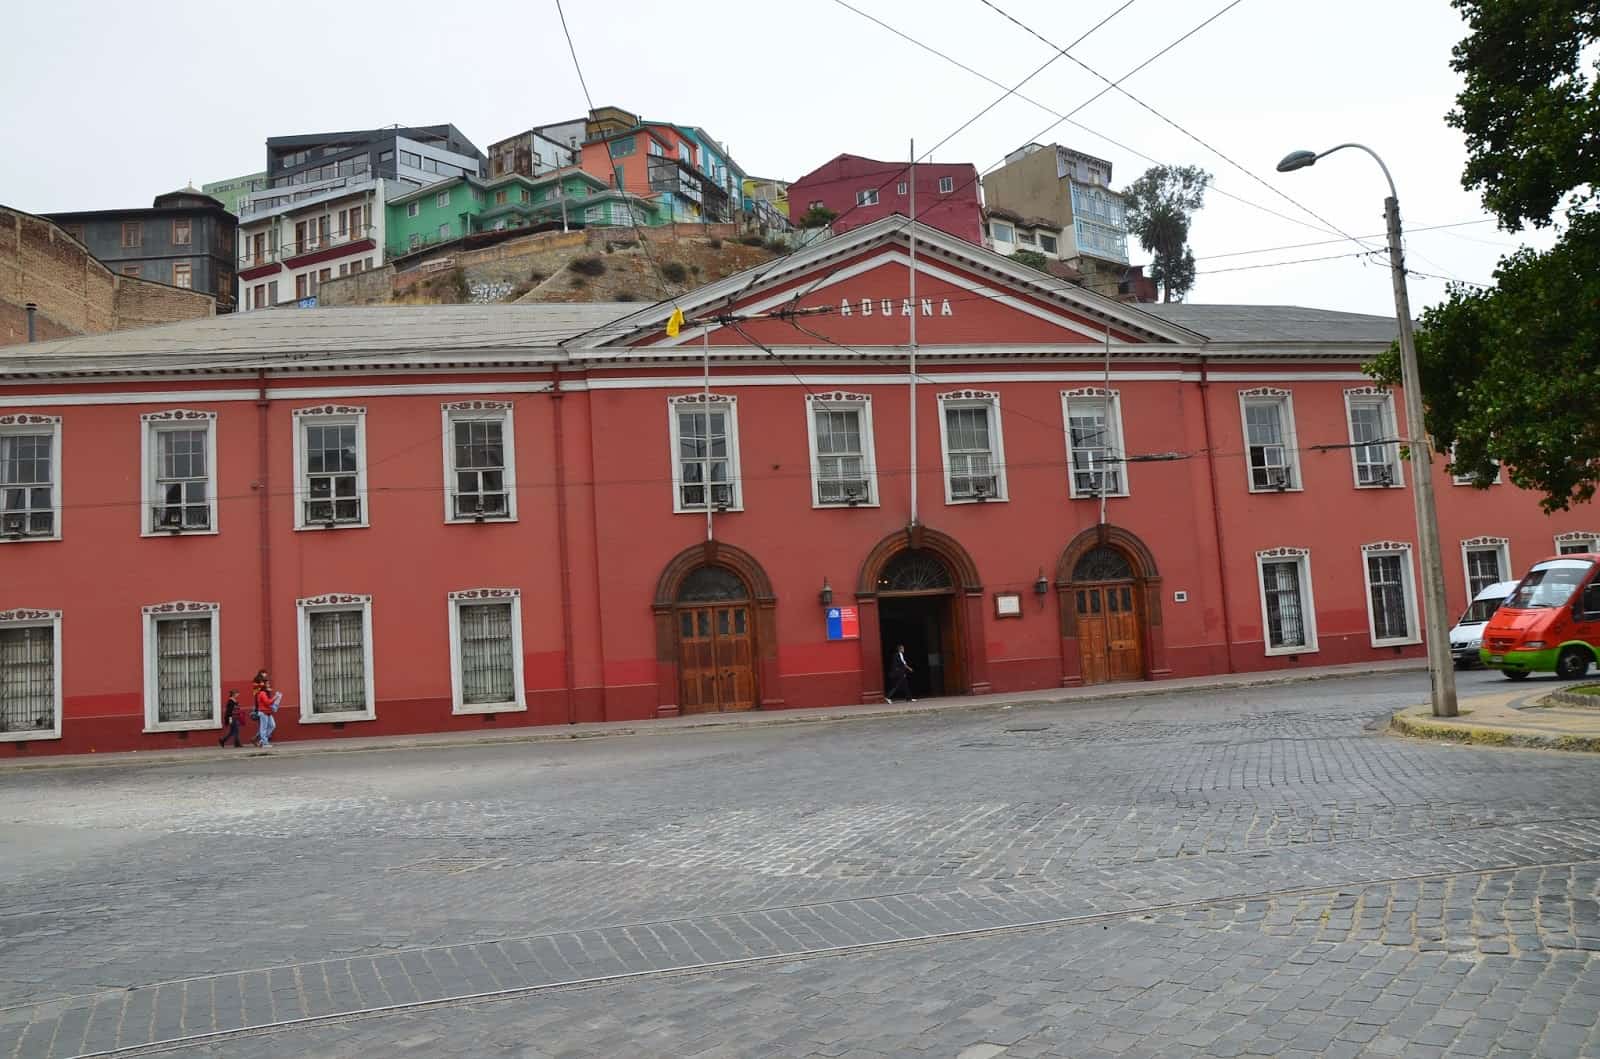 Edificio de la Aduana in Valparaíso, Chile